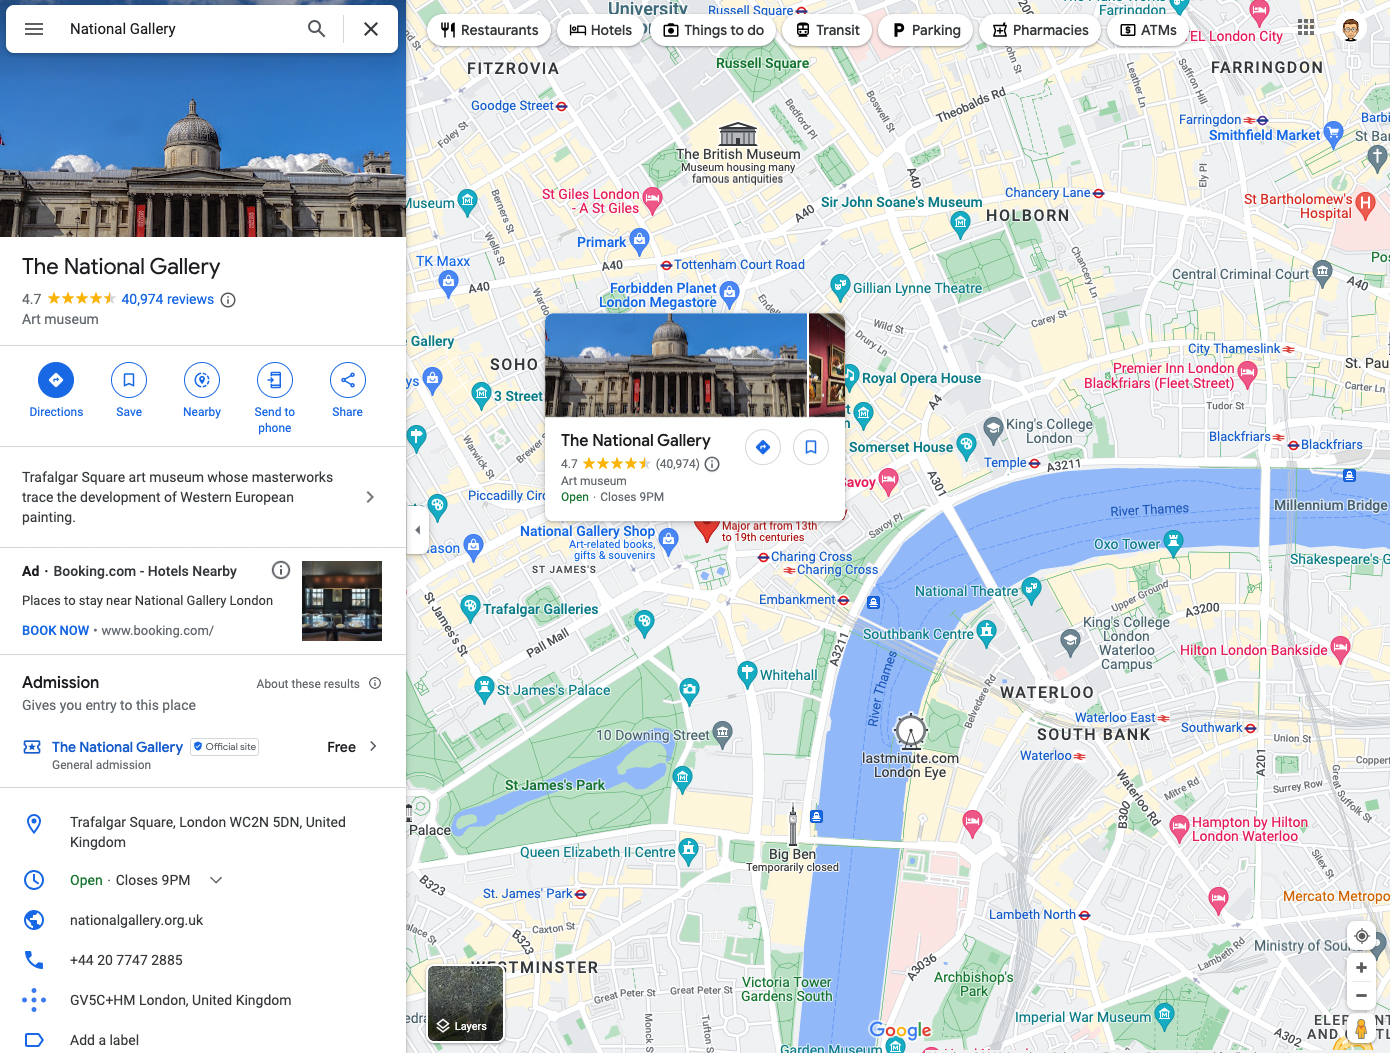 Como hacer un itinerario en google maps